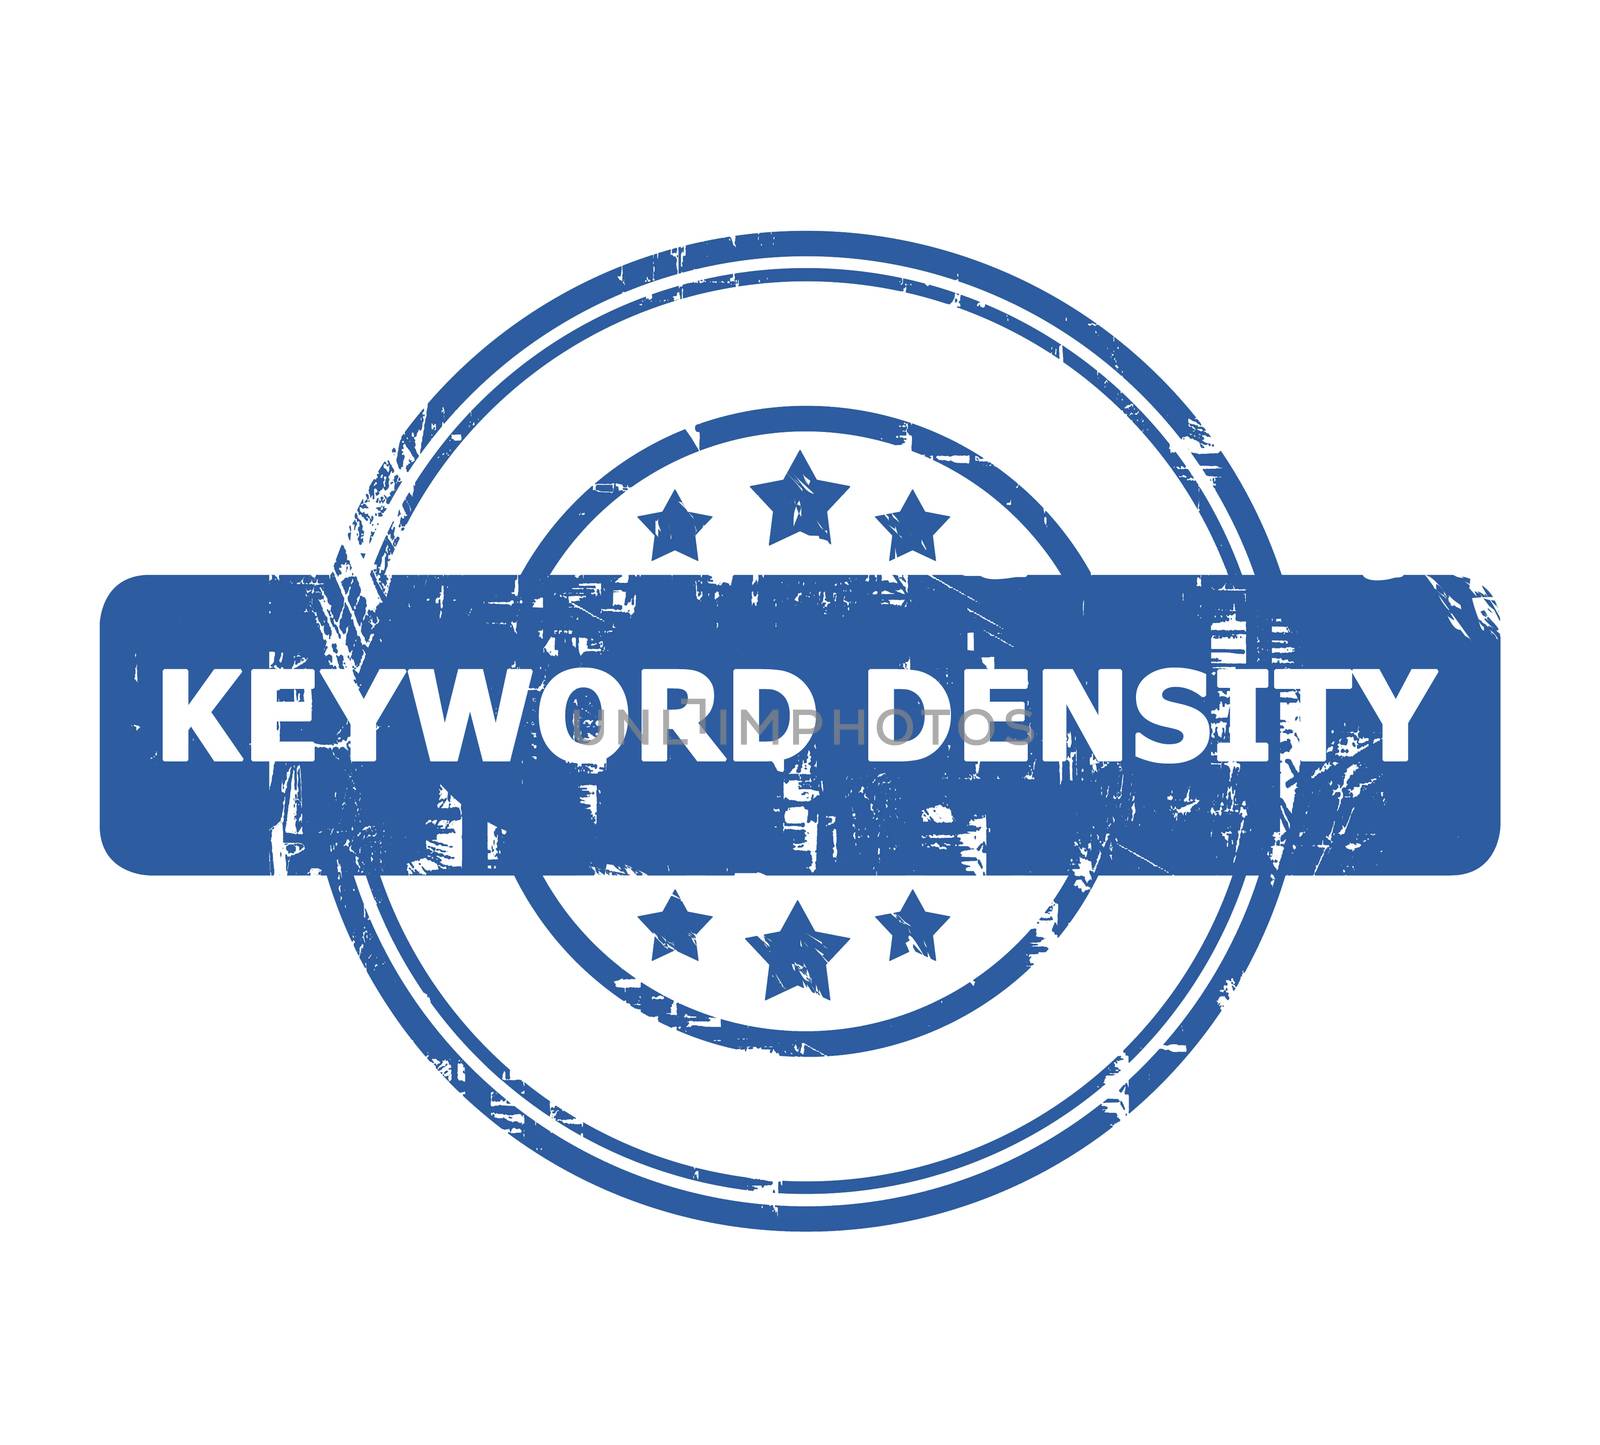 Keyword Density Stamp by speedfighter